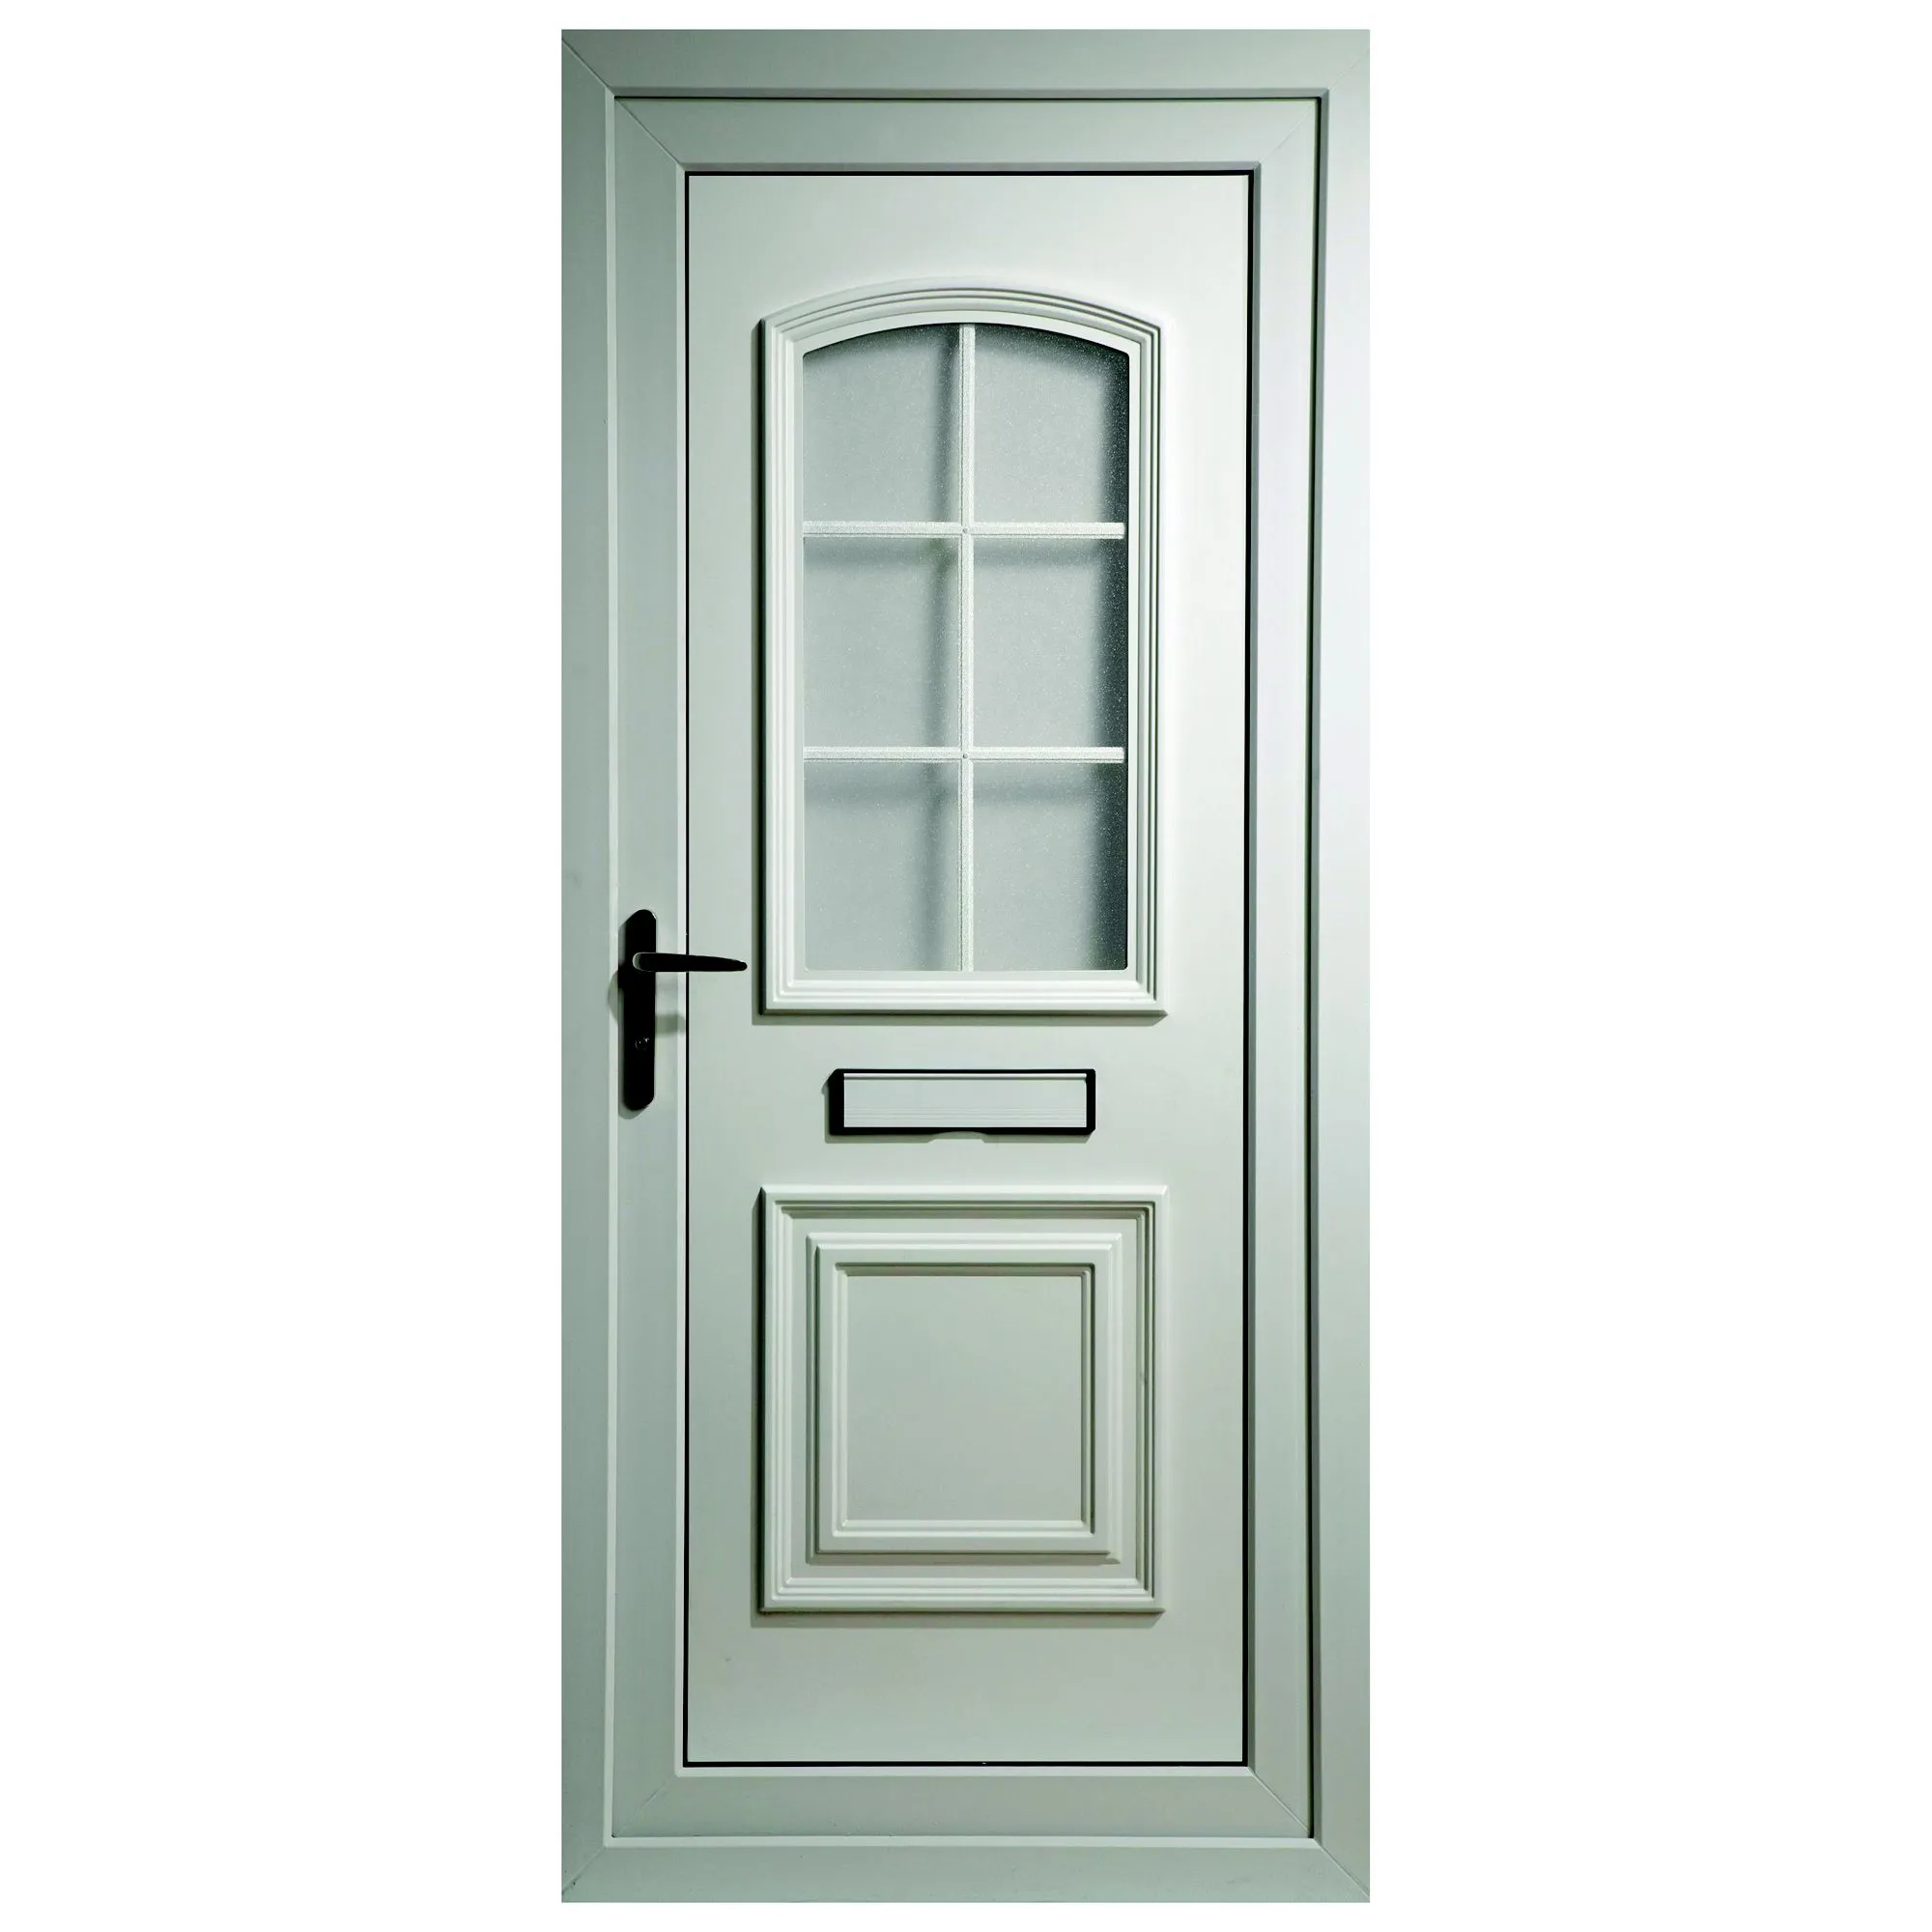 B&Q Georgian 2 panel Glazed White uPVC LH External Front Door set, (H)2055mm (W)920mm